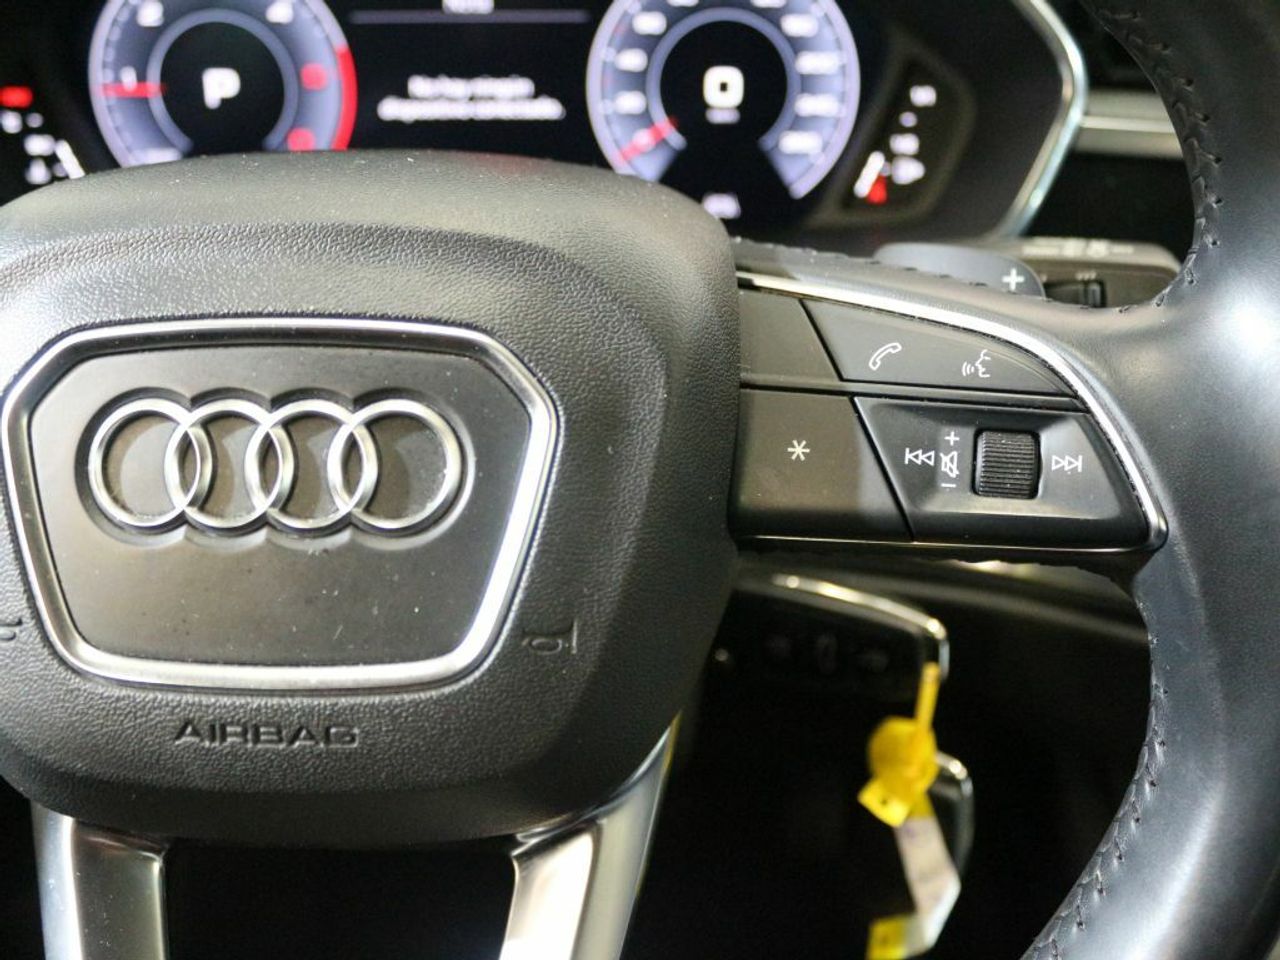 Foto Audi Q3 19